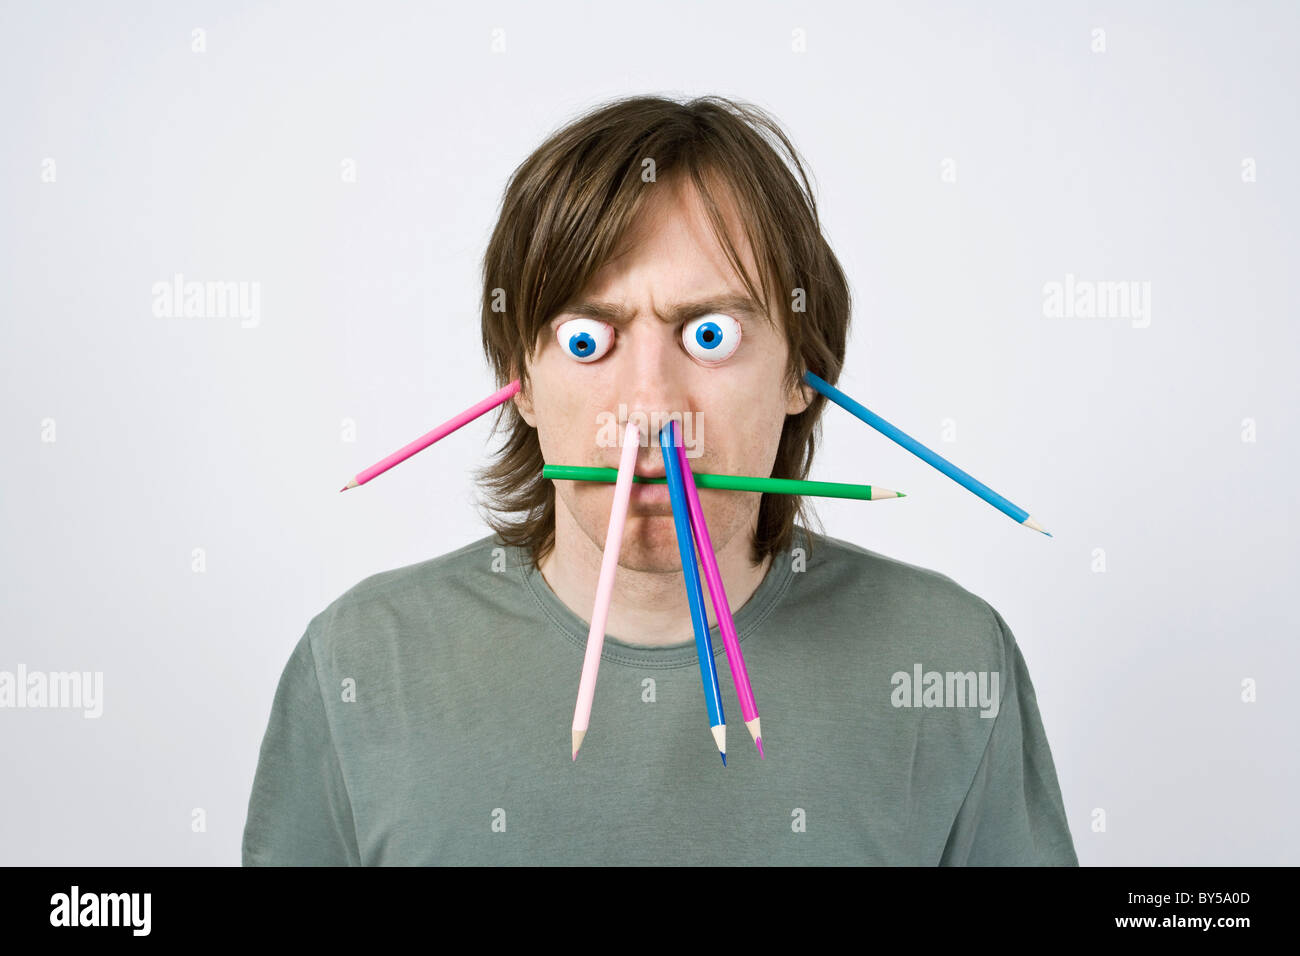 Bizarre man with pencils Stock Photo